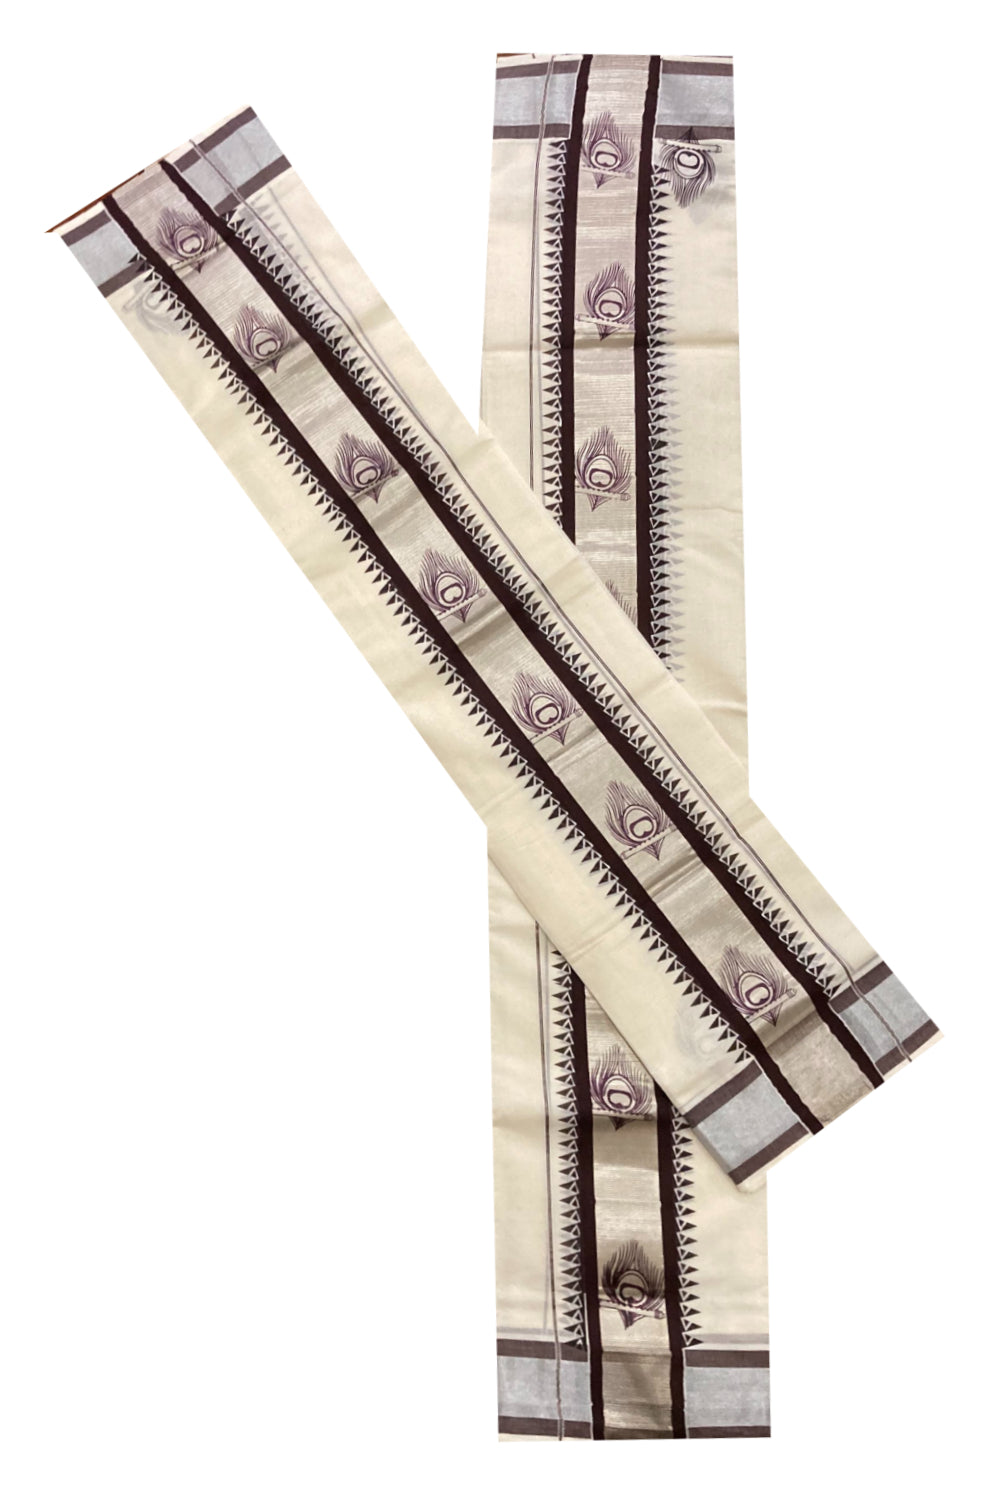 Single Set Mundu in Silver and Brown Kara with Hand Block Prints (2.80 m)